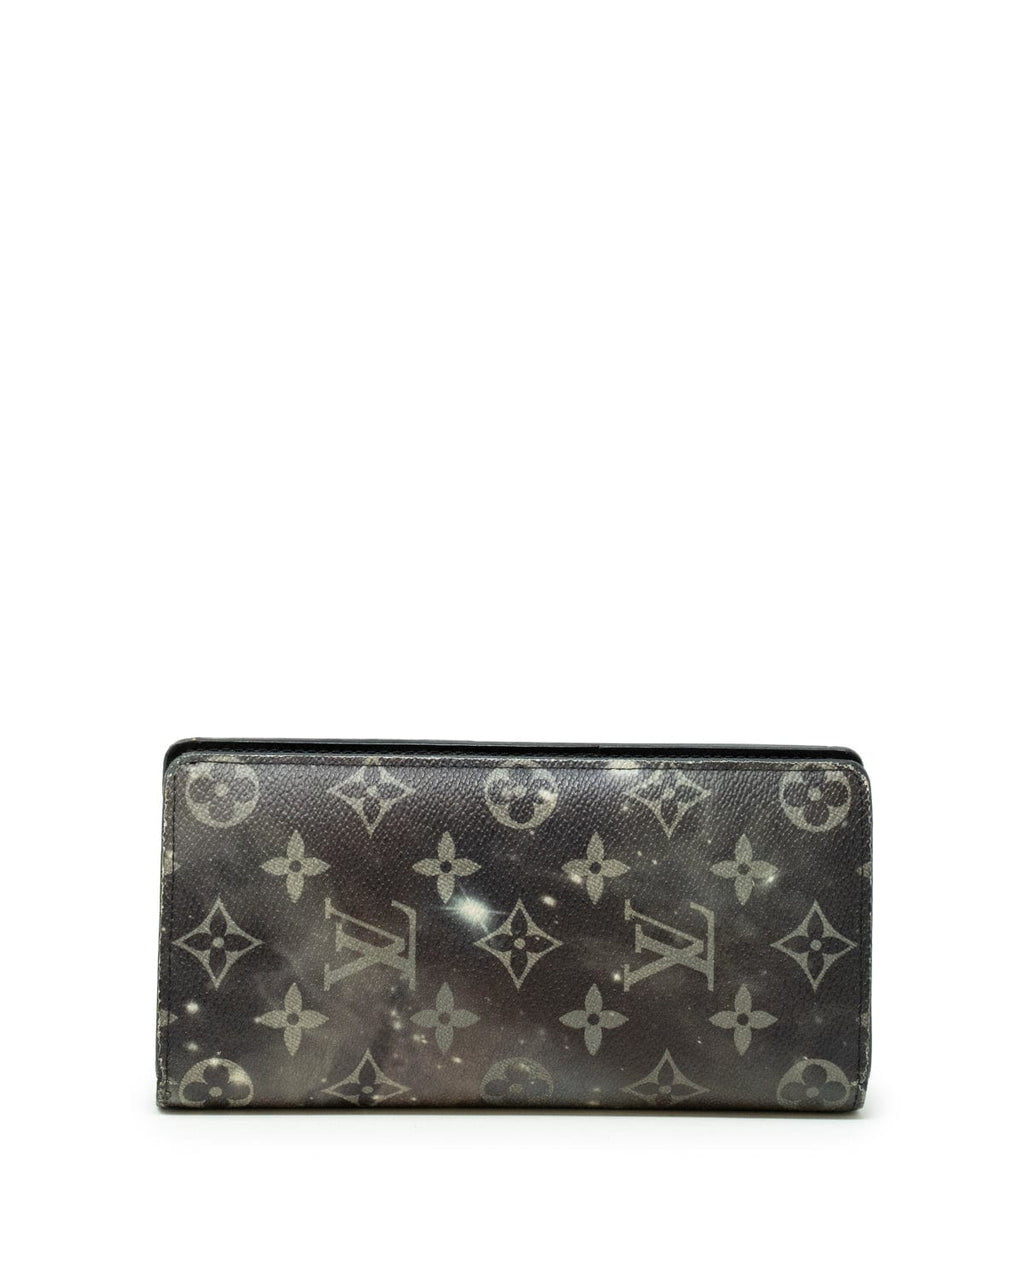 Louis Vuitton Limited Edition Virgil Abloh Galaxy Brazza Wallet